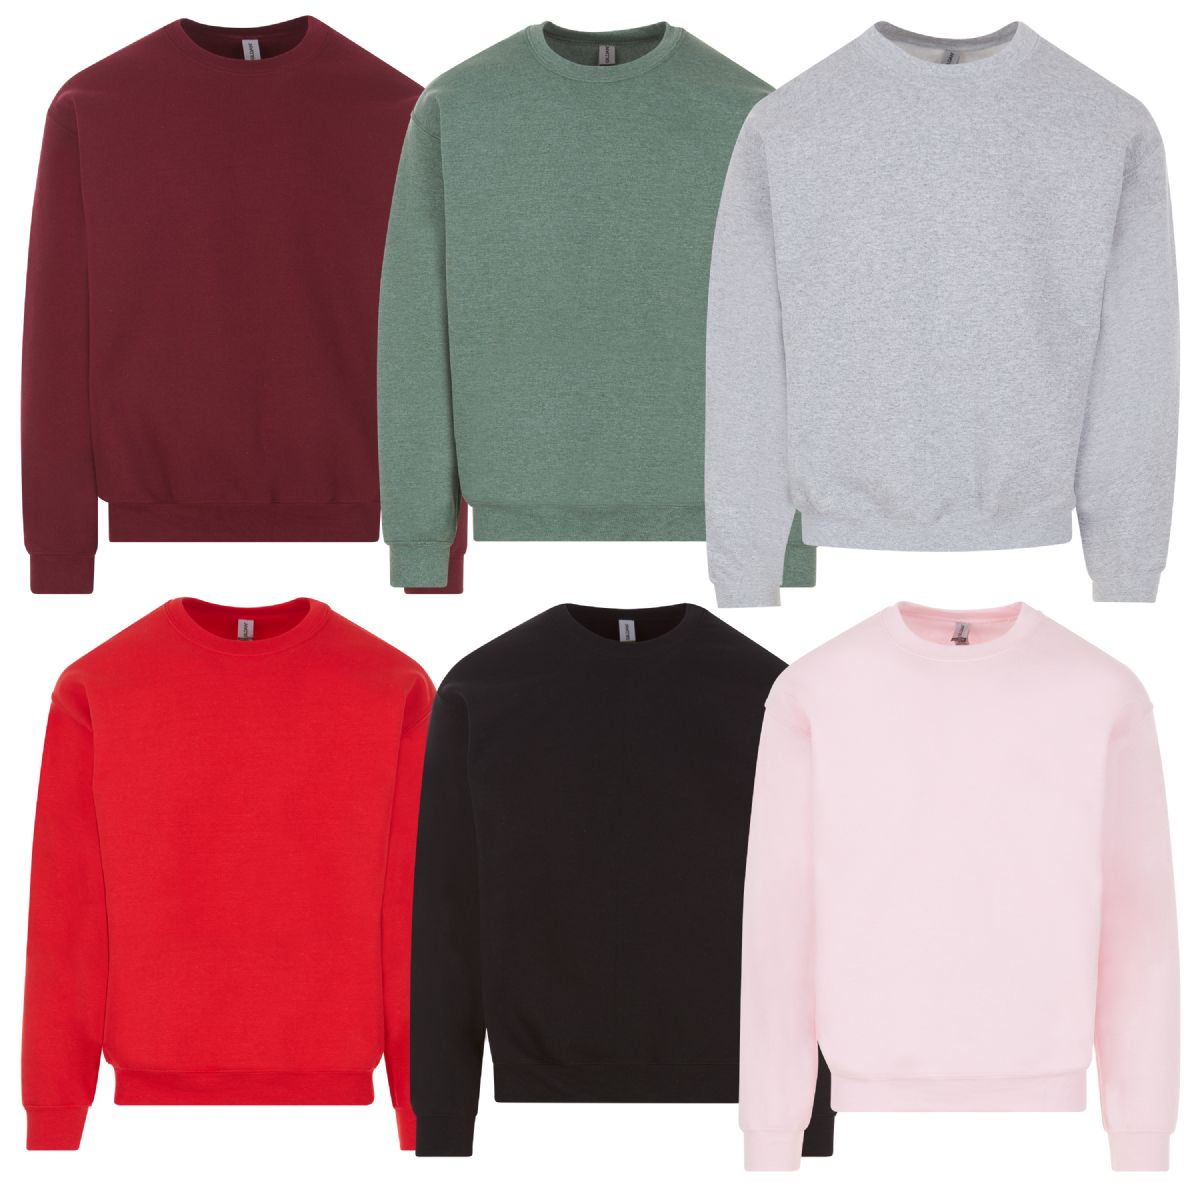 12 Pieces of Gildan Unisex Assorted Colors Fleece Sweat Shirts Size 4xlarge